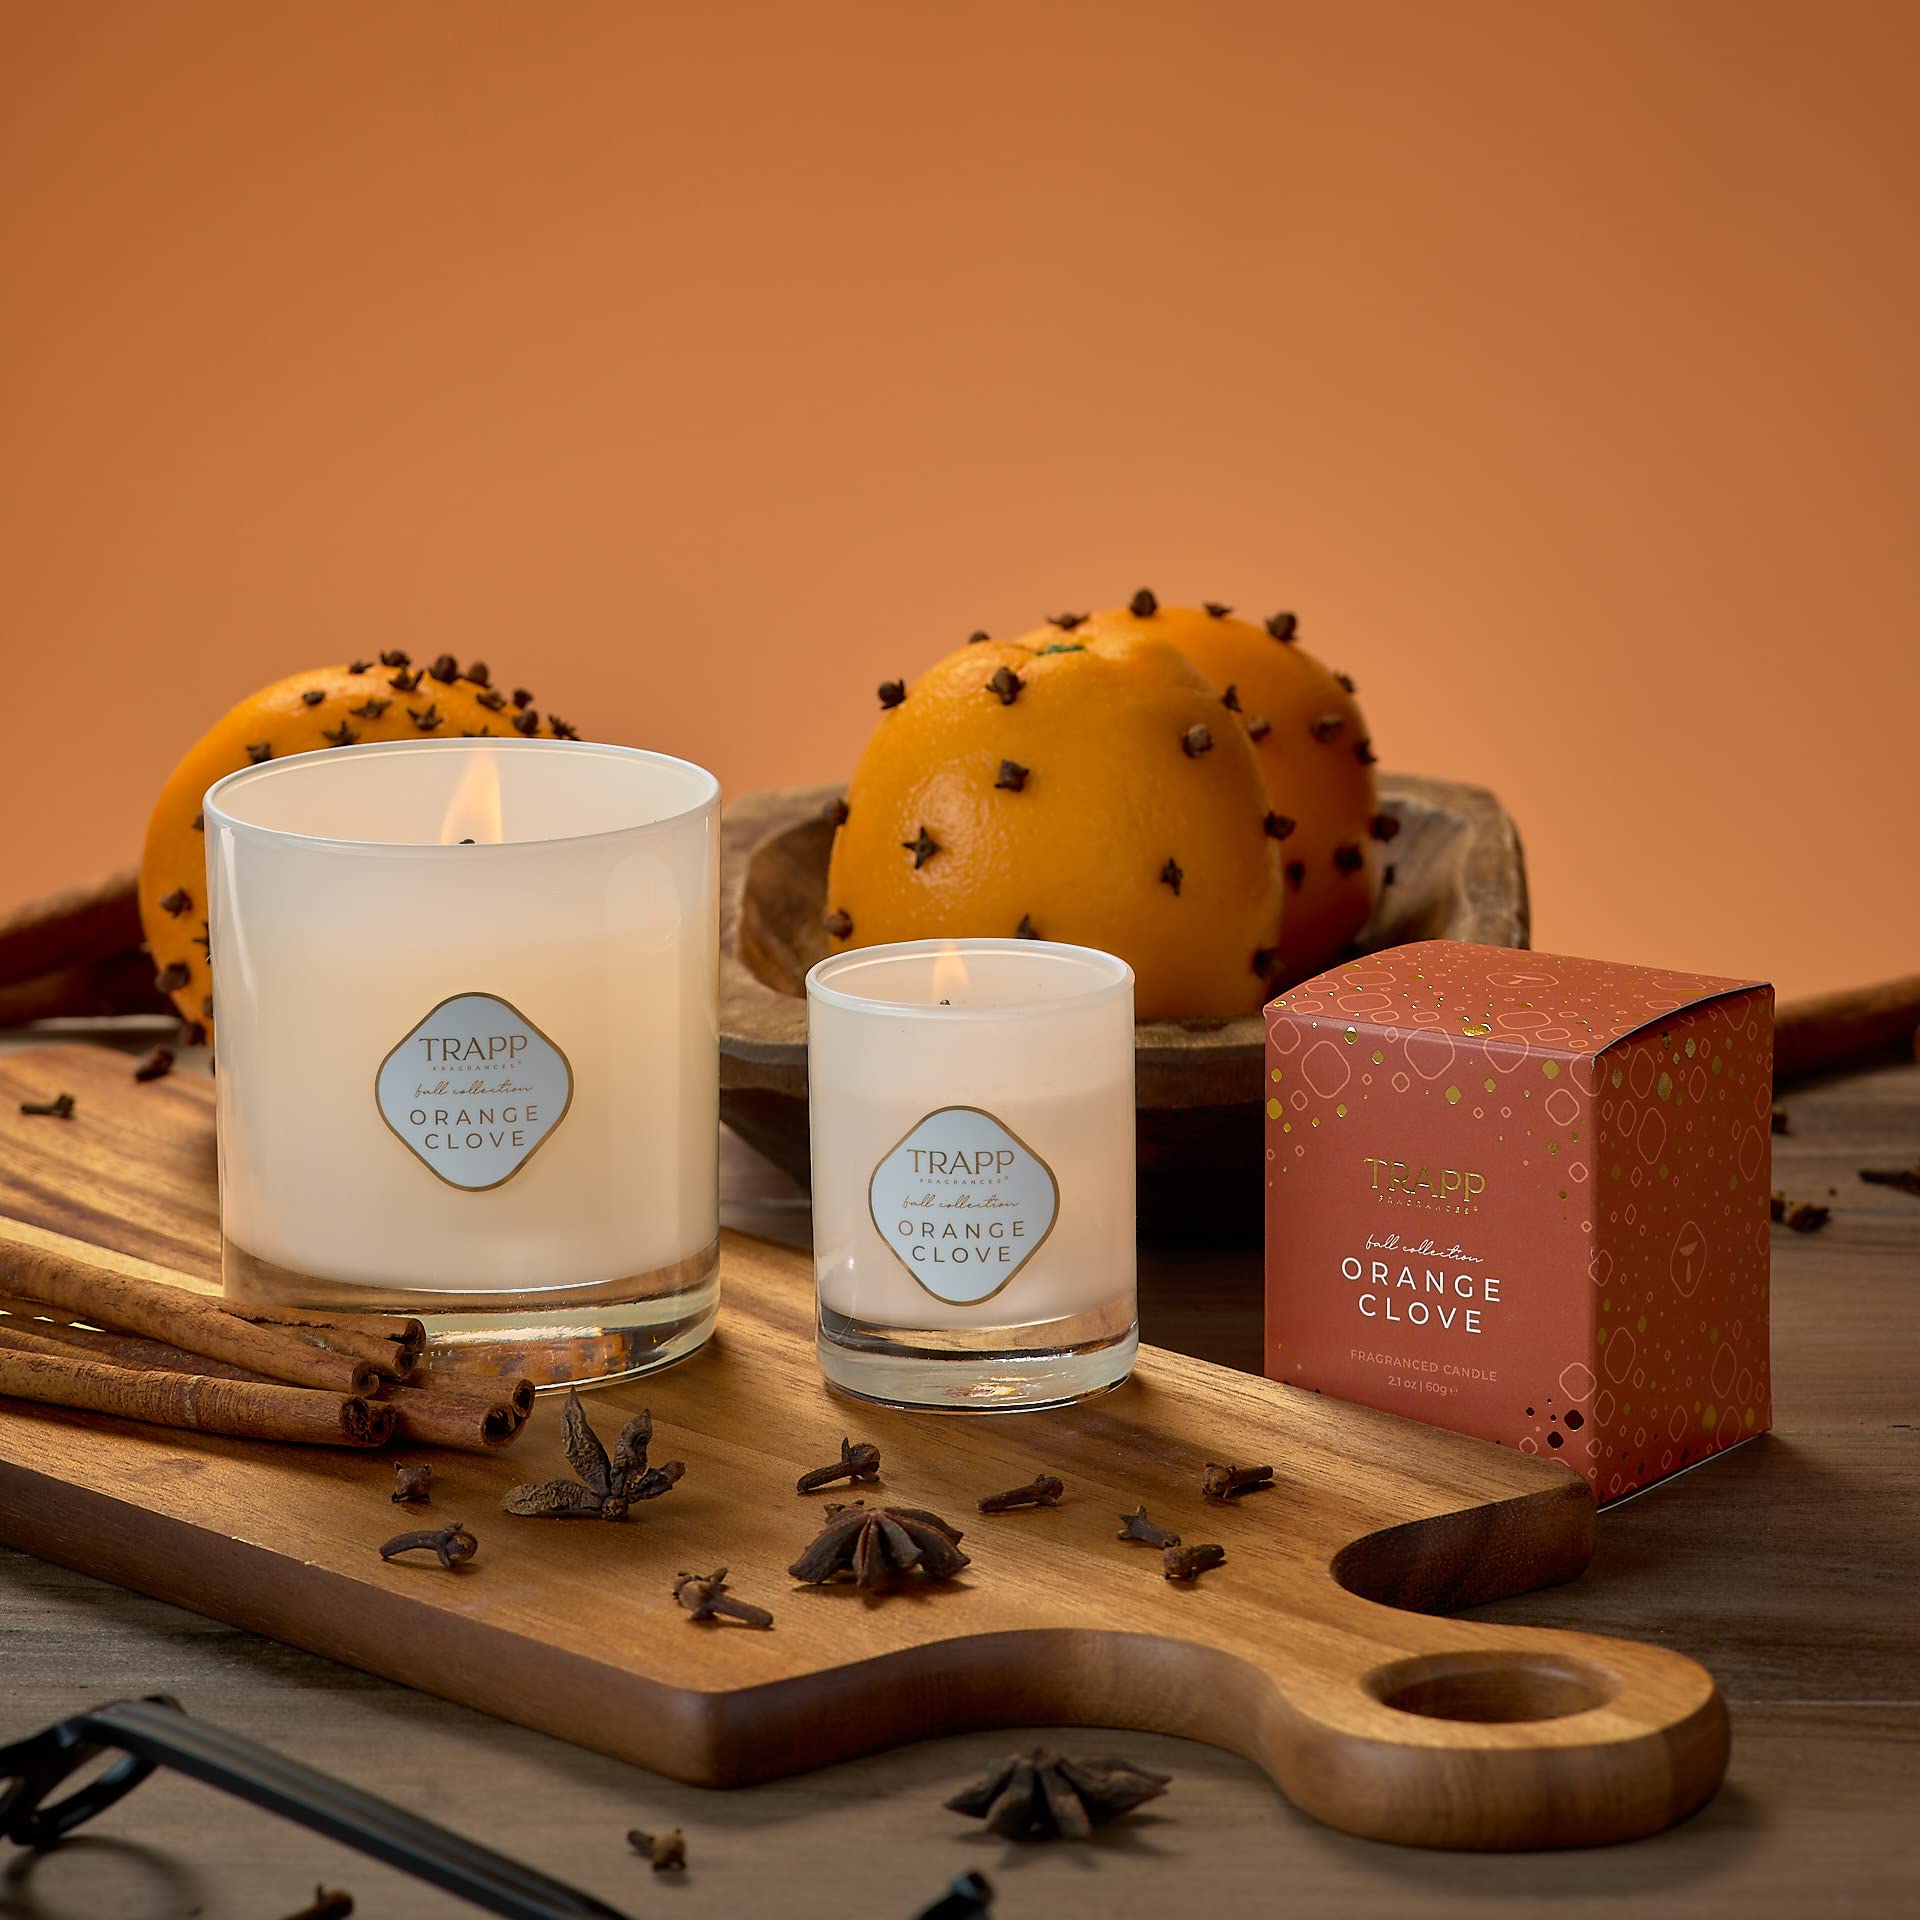 Trapp No. 57 - Orange Clove - 7 oz. Signature Candle - Aromatic Home Fragrance with Seasonal Scent of Juicy Orange, Cinnamon, & Freshly Ground Clove Notes - Petrolatum Wax